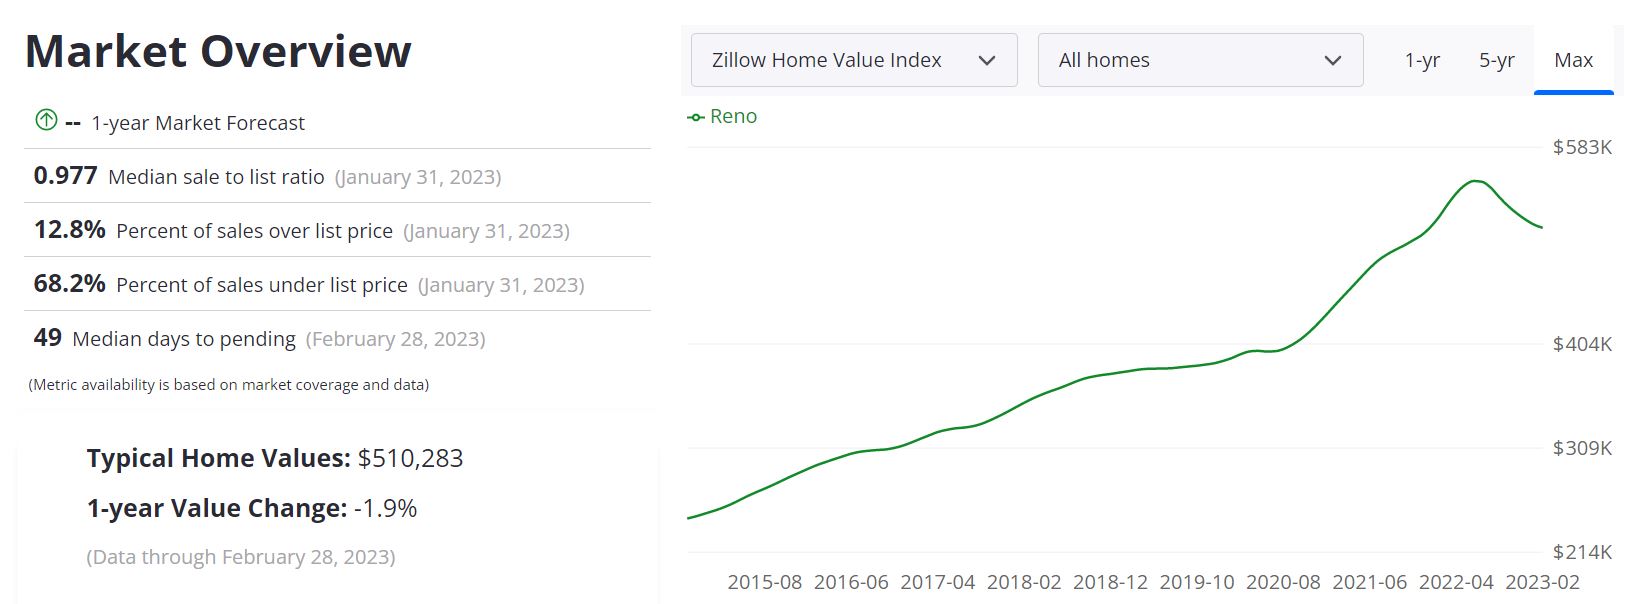 Reno Real Estate Market Forecast